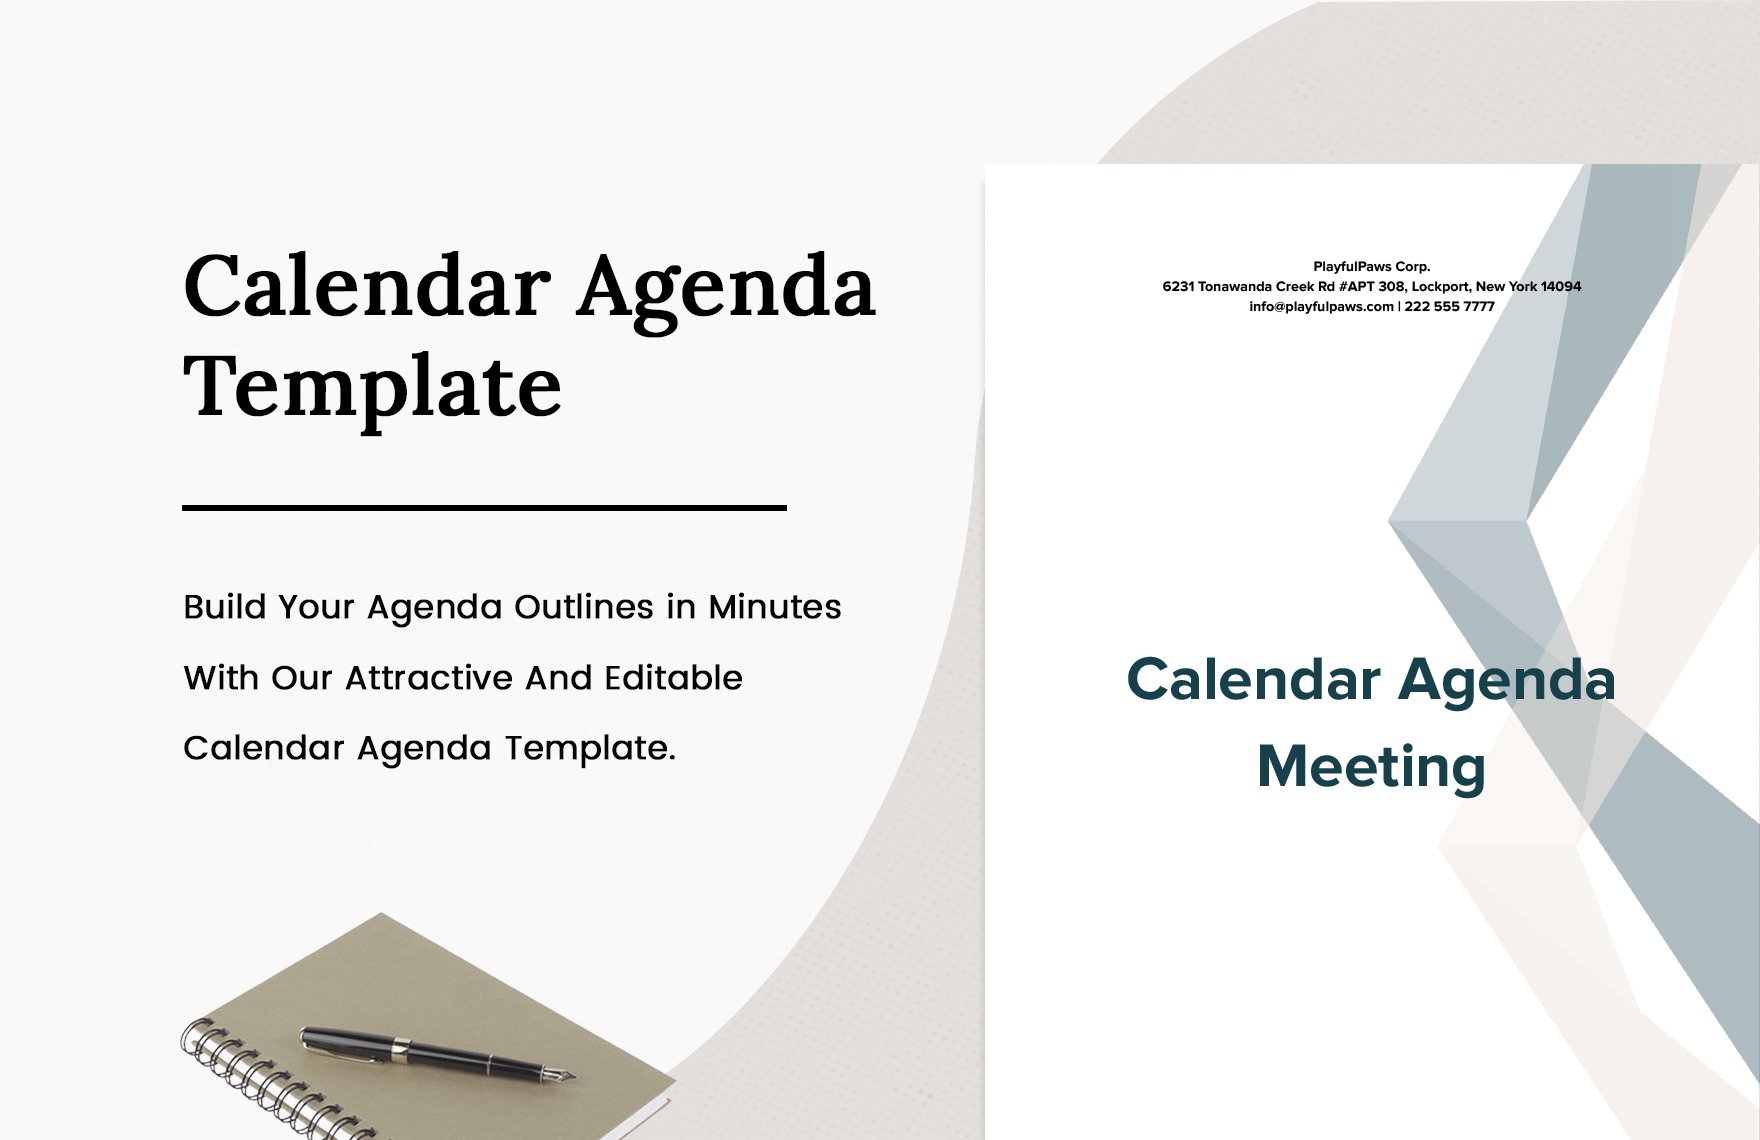 Calendar Agenda Template in Word, Google Docs, PDF